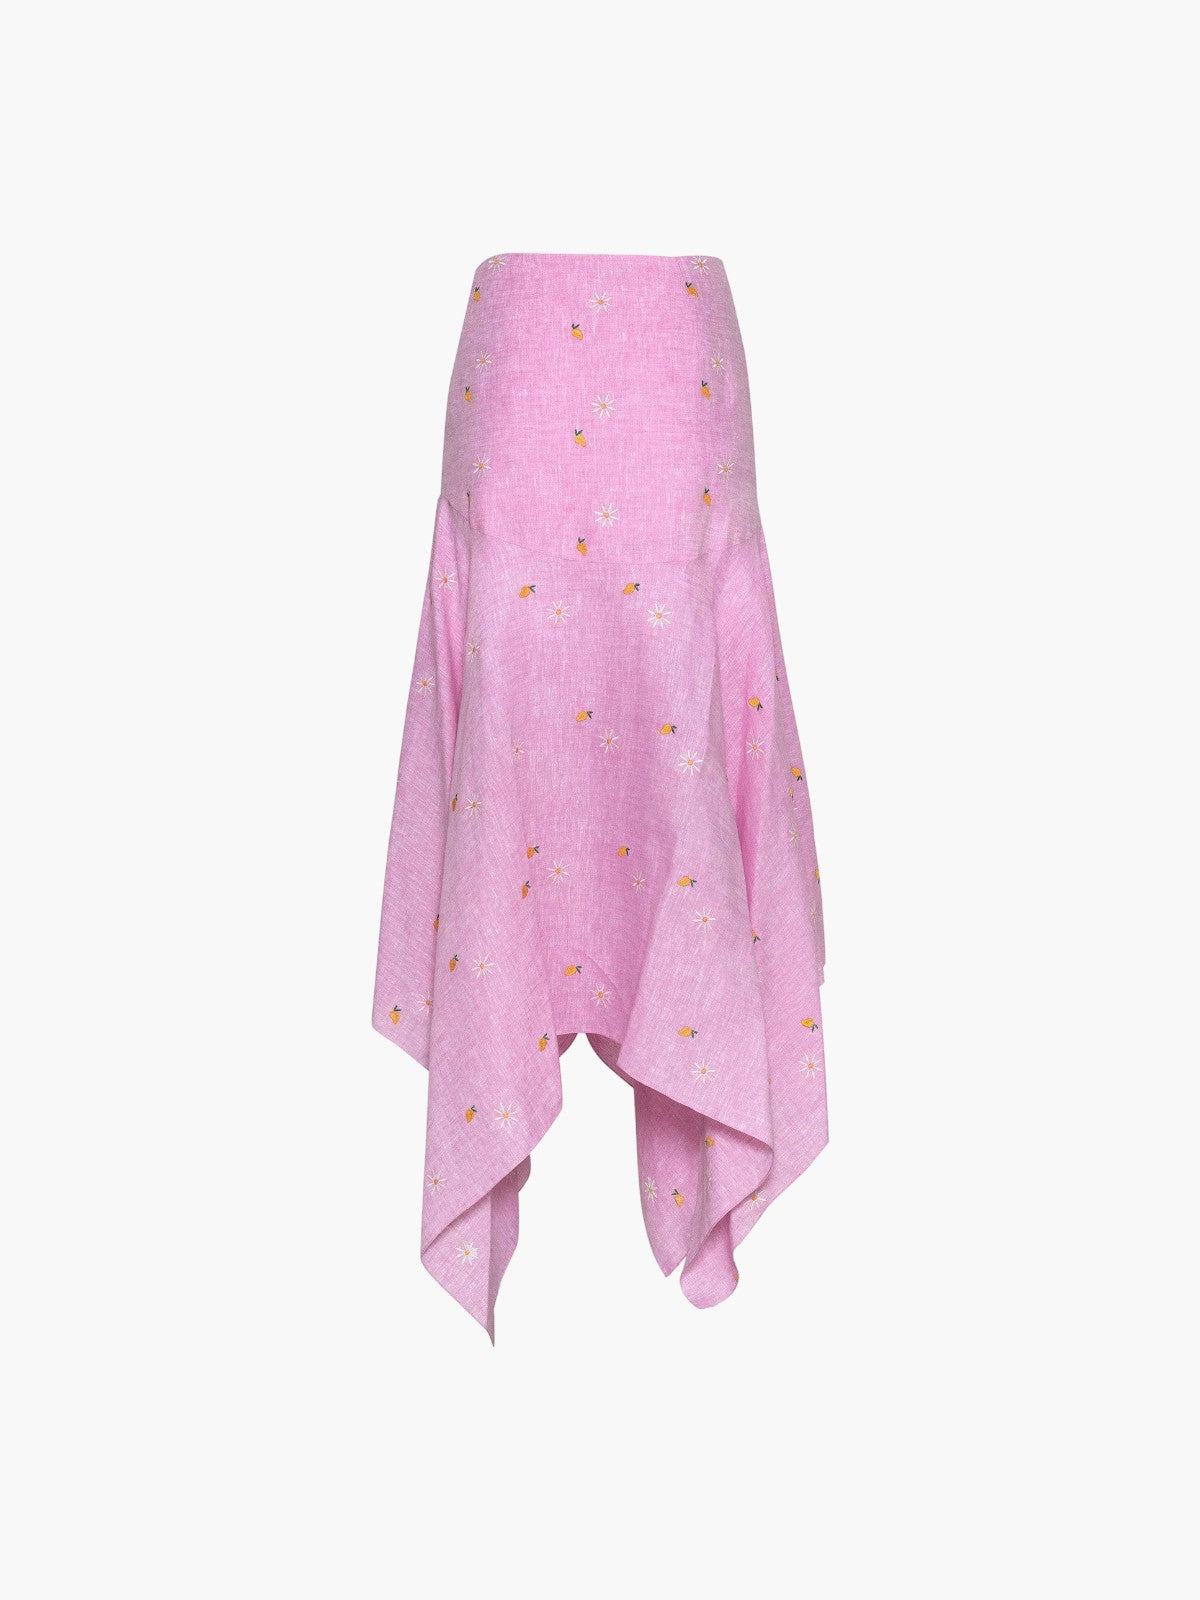 Vela Skirt | Mango Camomille Pink Vela Skirt | Mango Camomille Pink